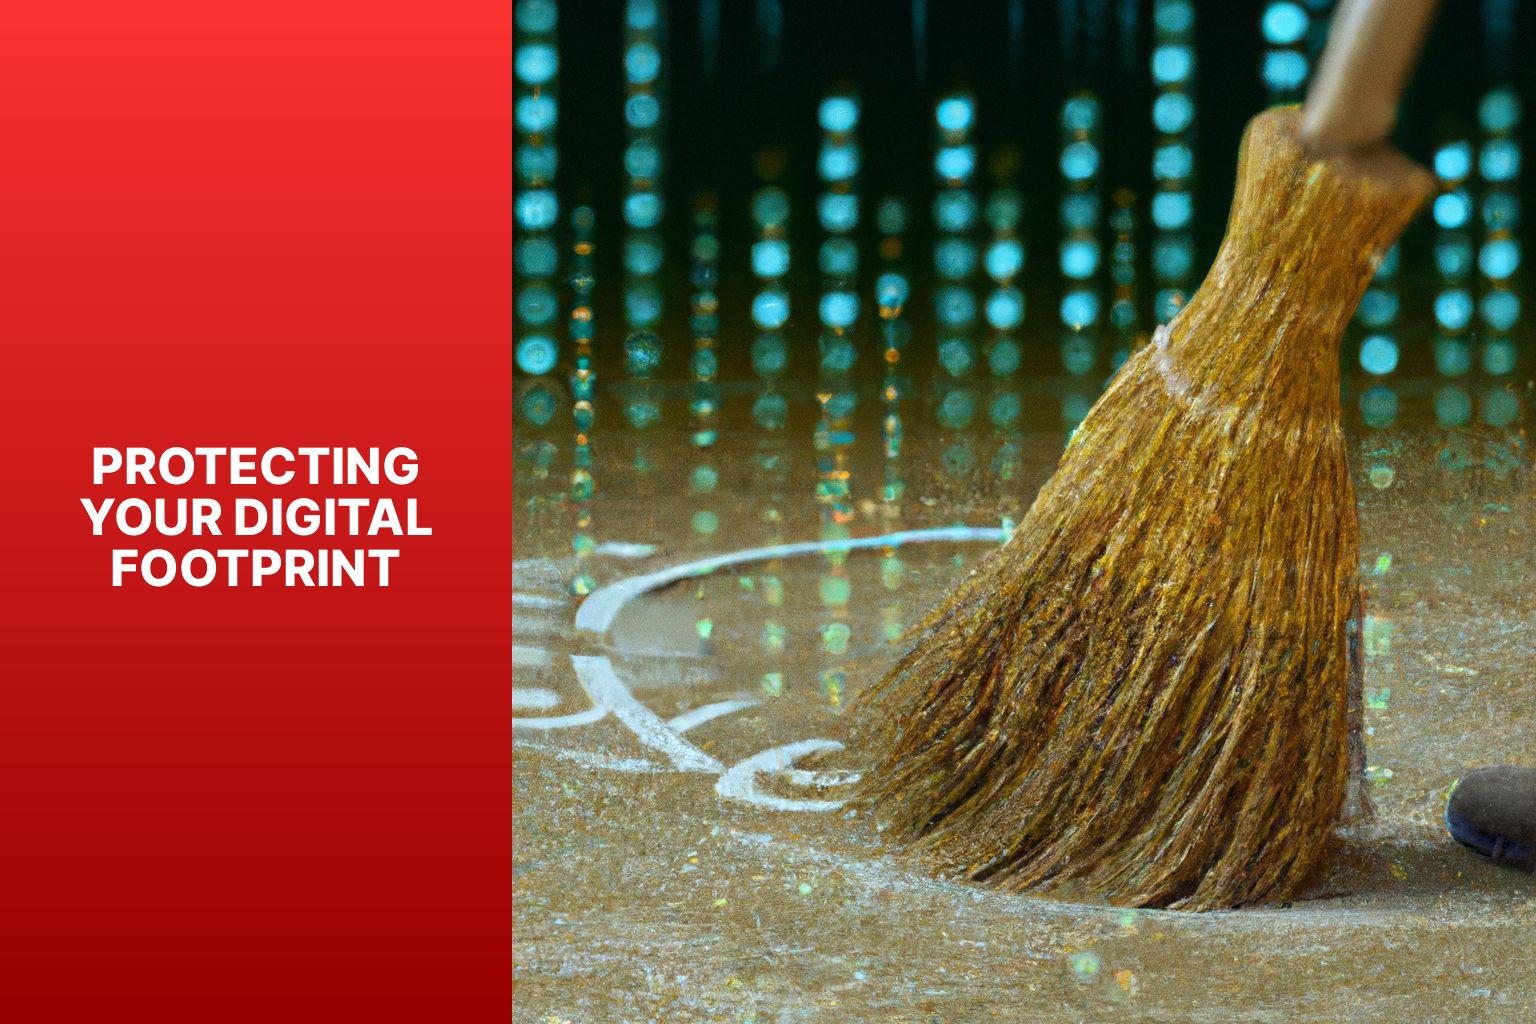 Protecting Your Digital Footprint - Tutorial: How to Clean Up Your Digital Footprint 